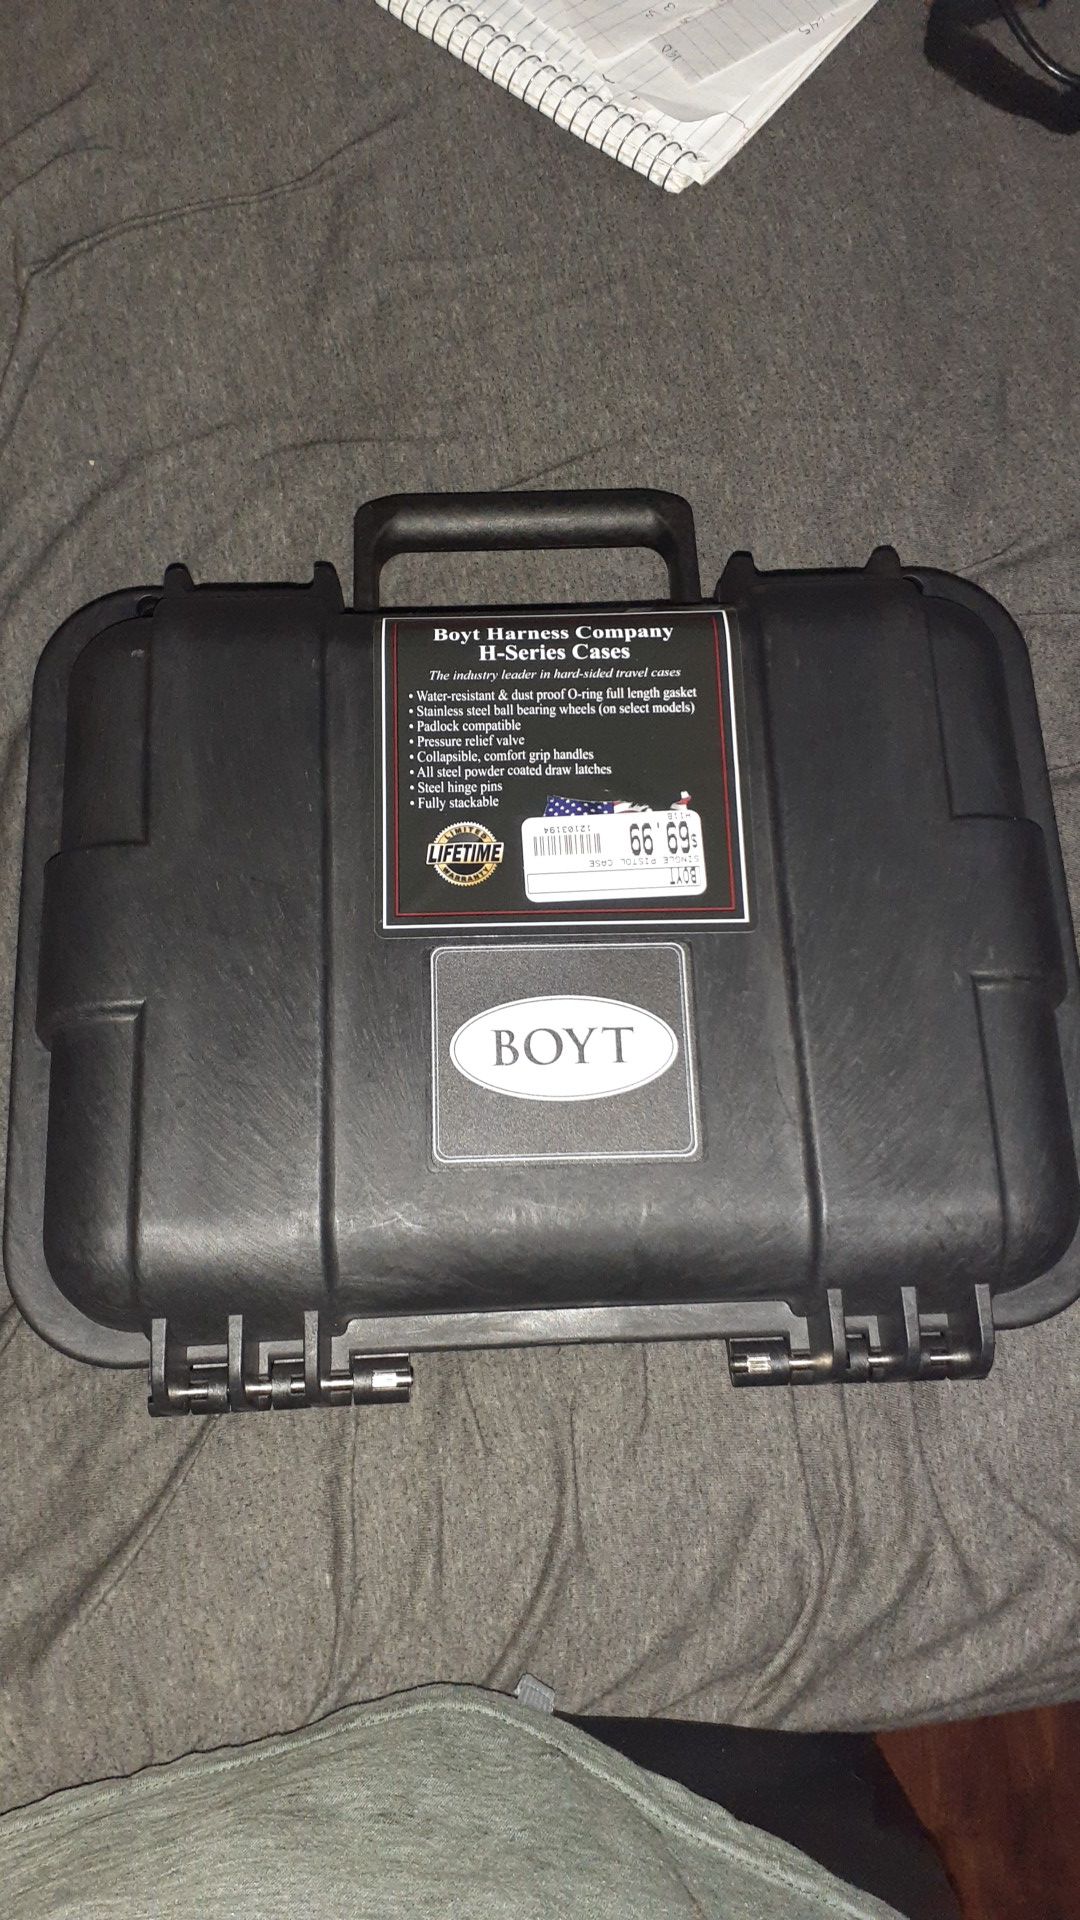 Boyt harness company single handgun case